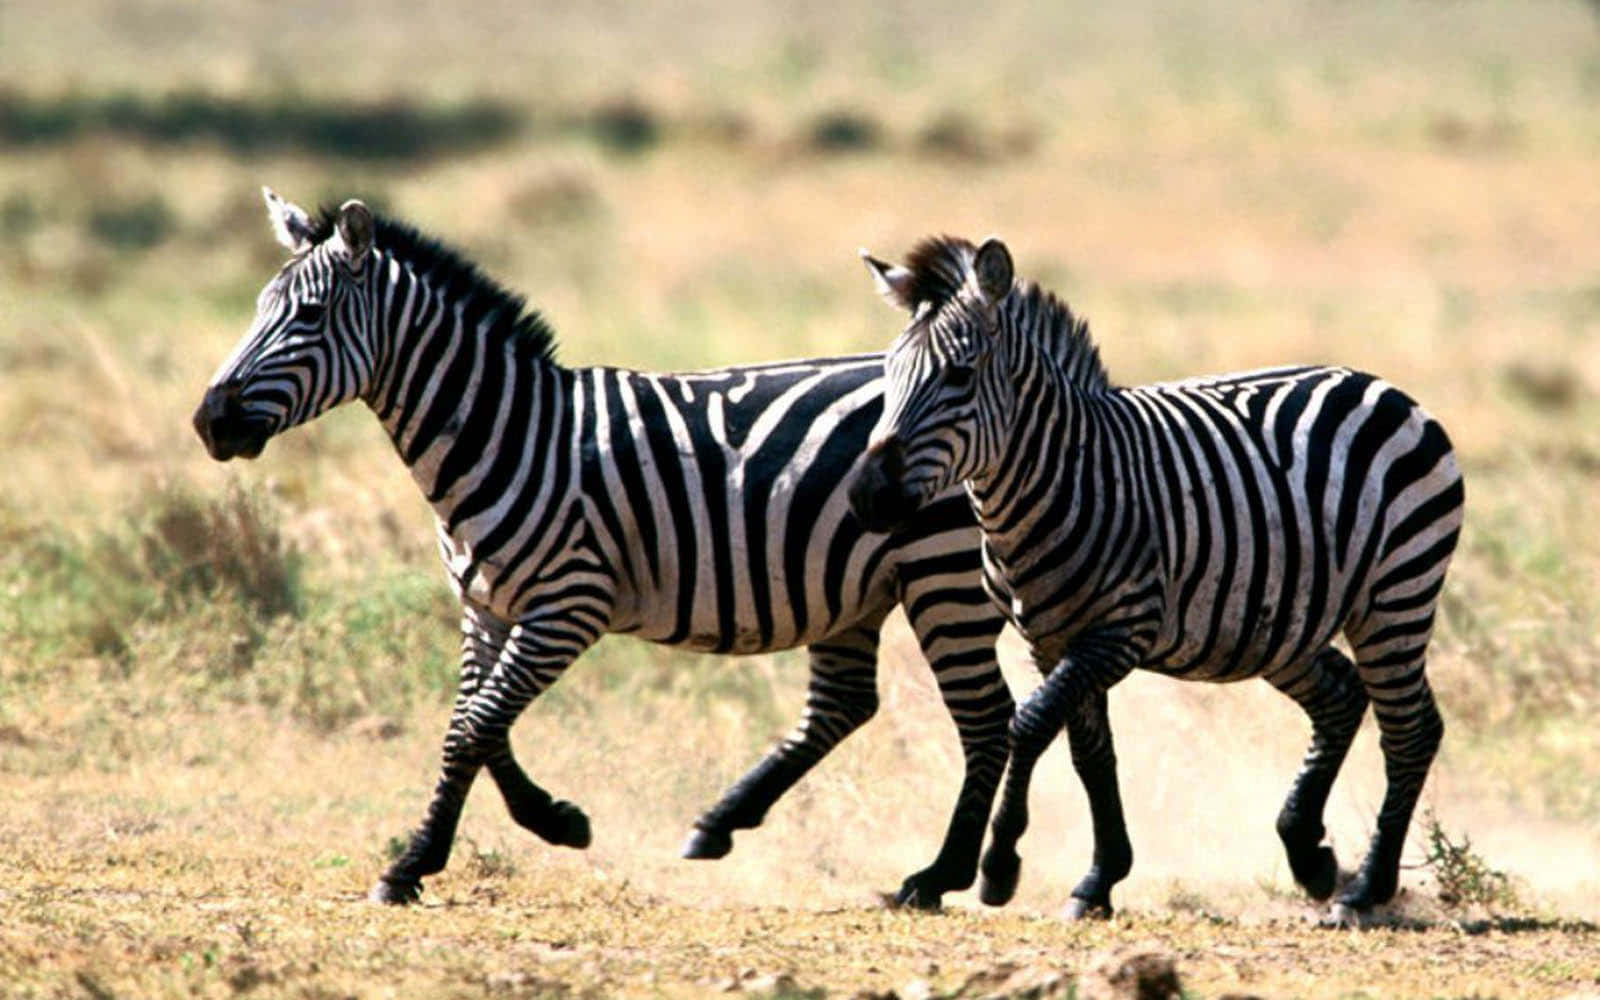 Two zebra standing in an African field